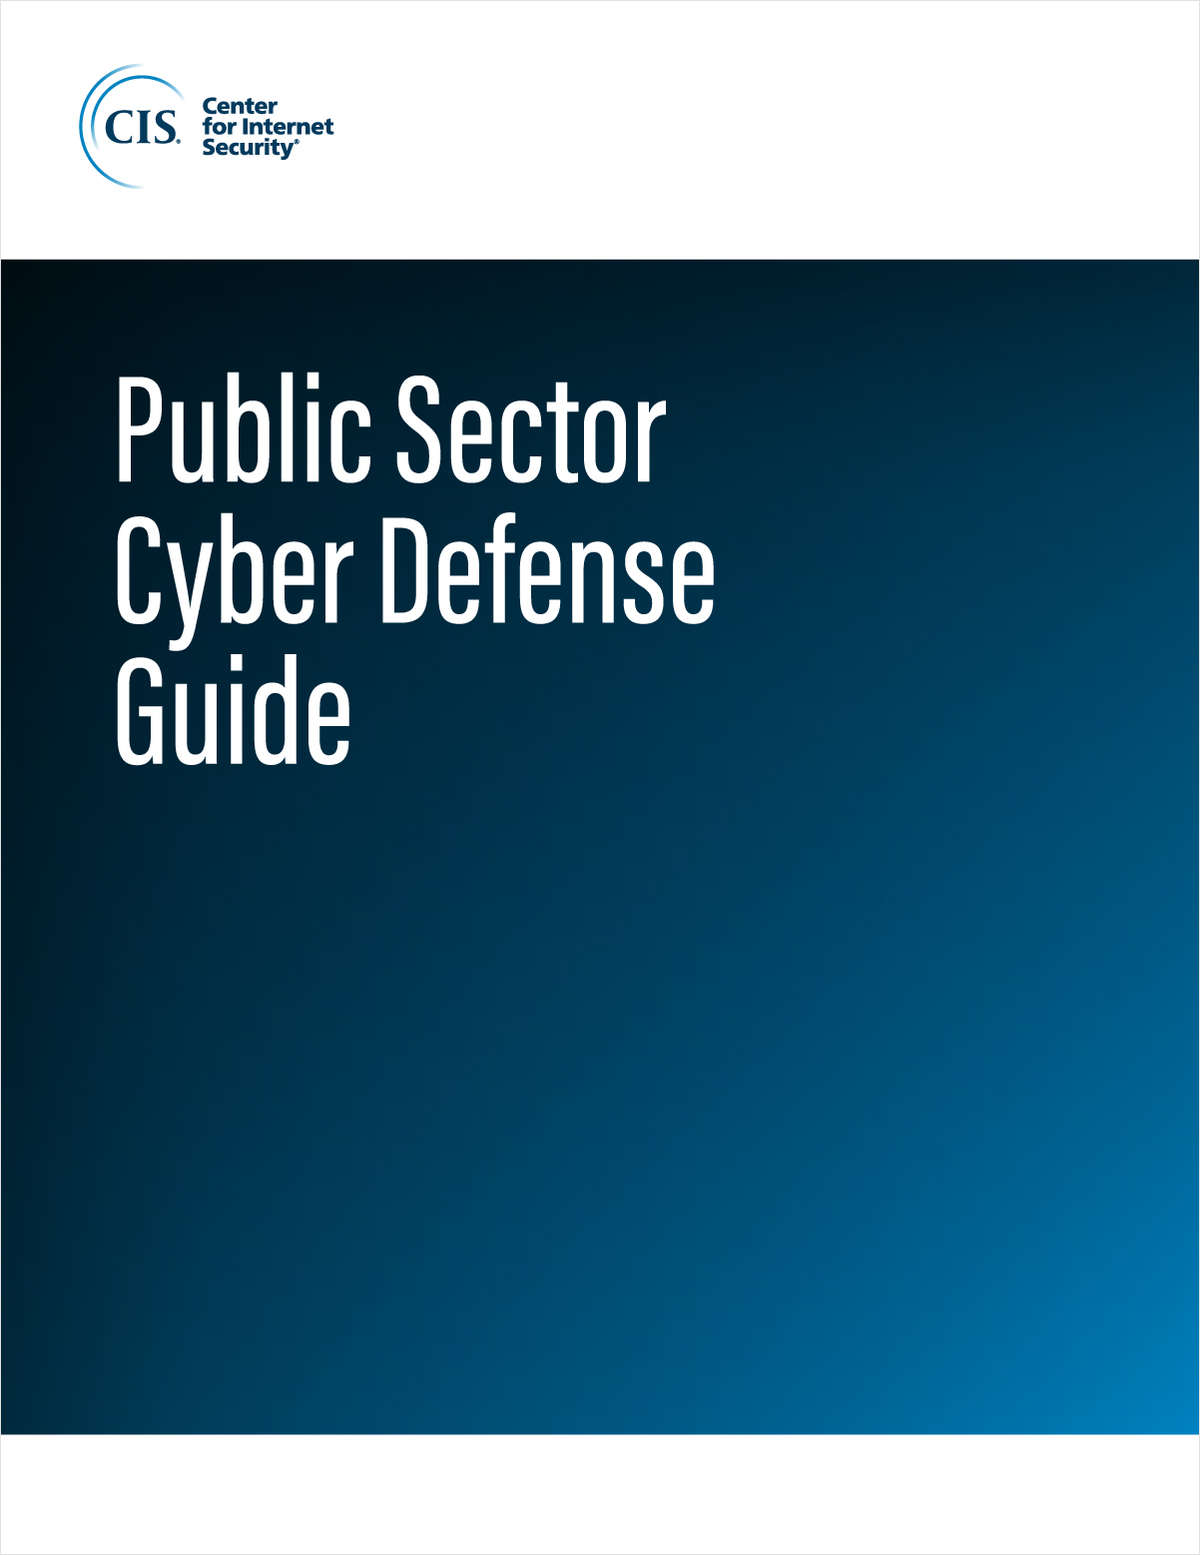 Public Sector Cyber Defense Guide